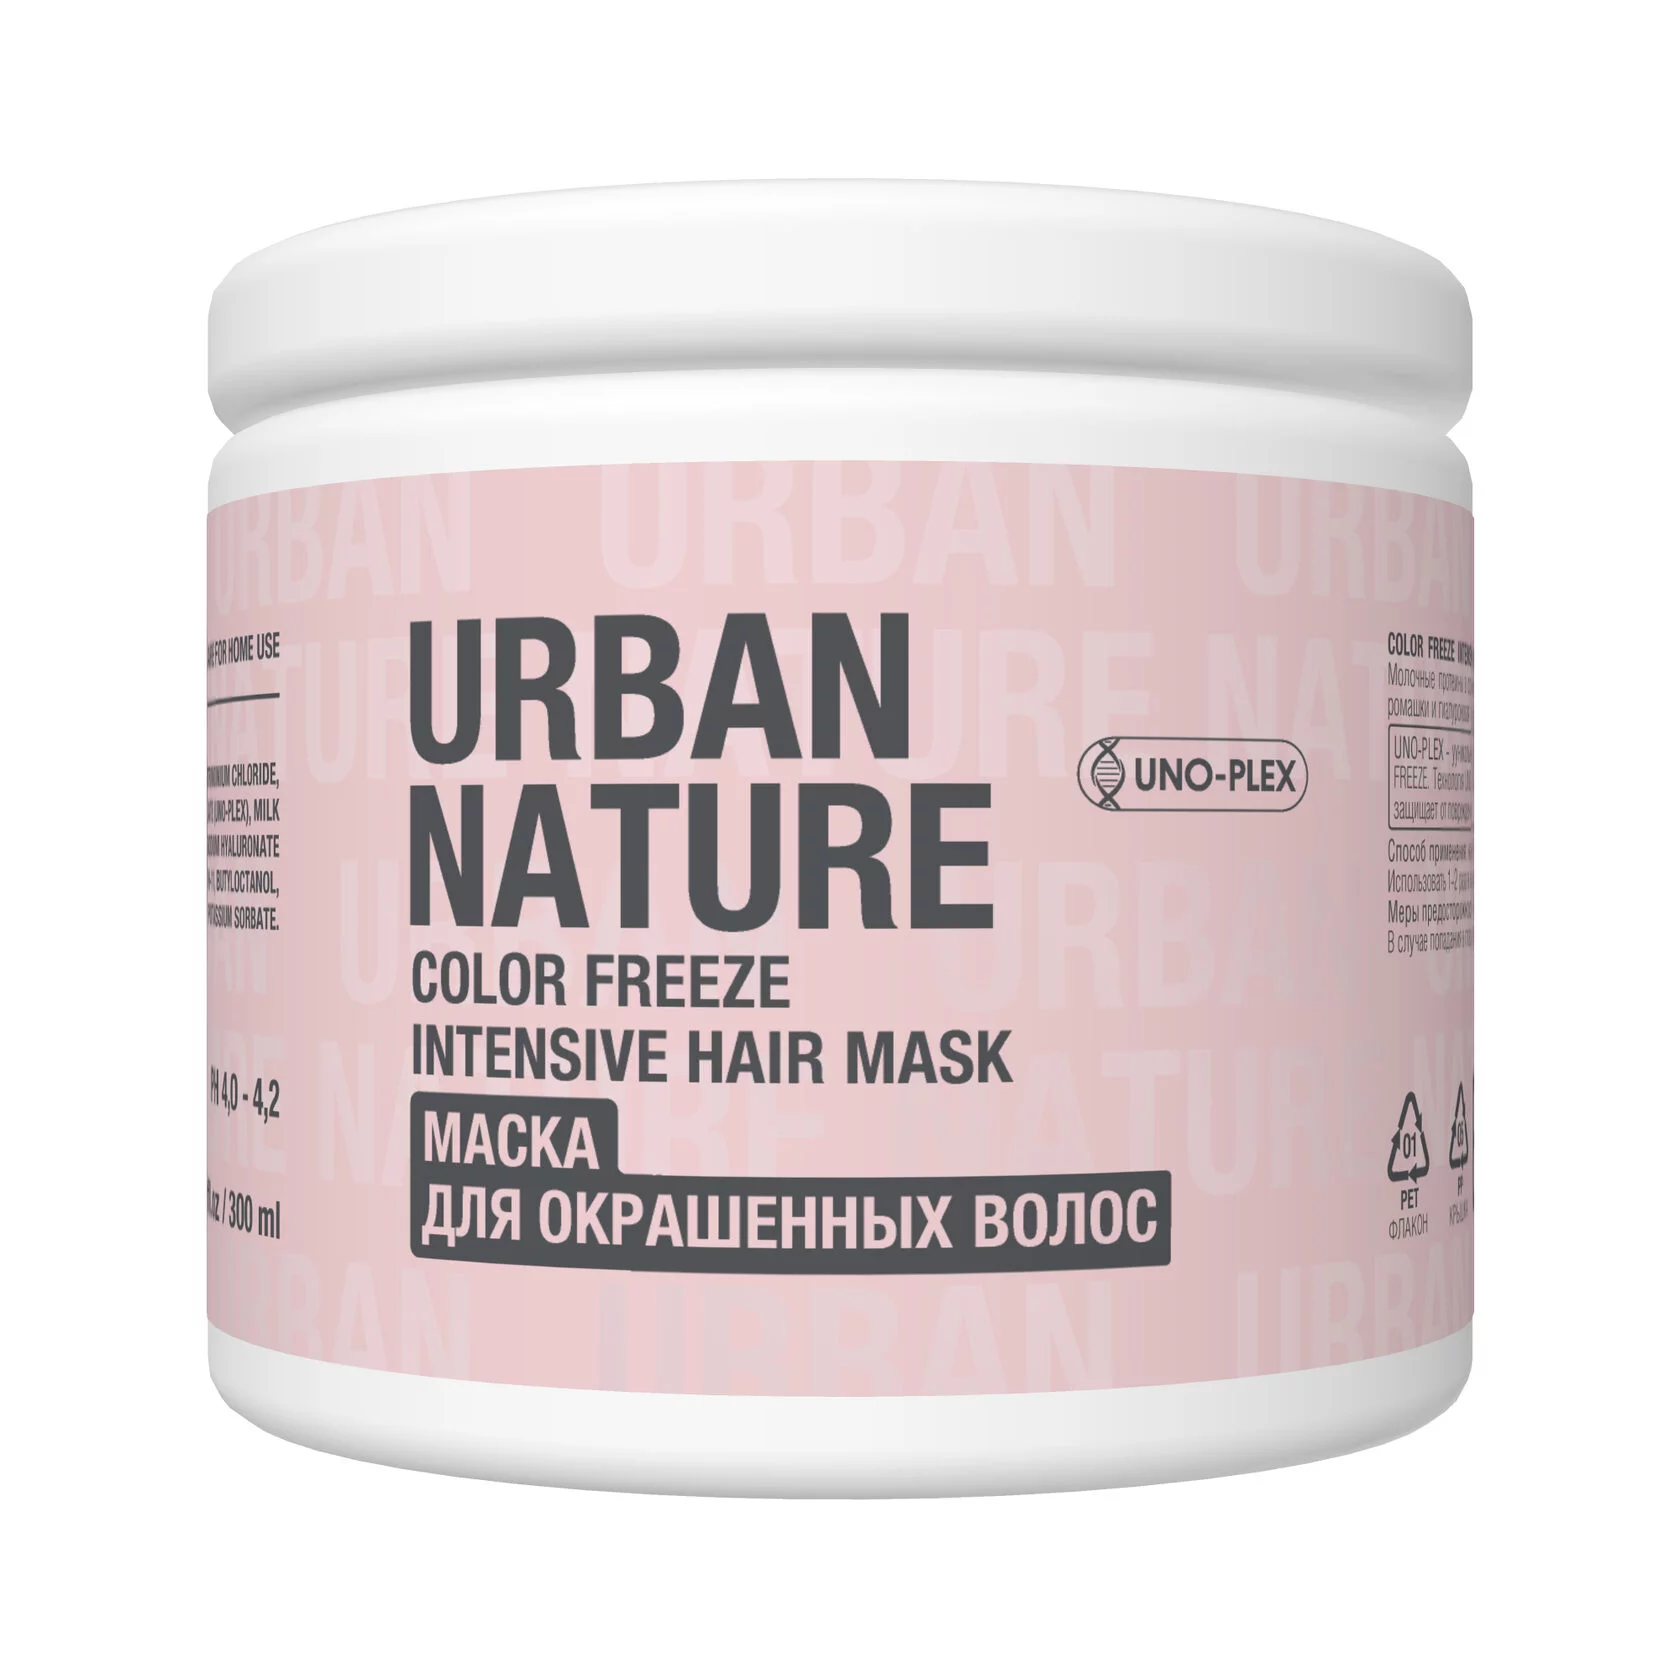 Маска для окрашенных волос Urban Nature Color Freeze Intensive Hair Mask, 300 мл